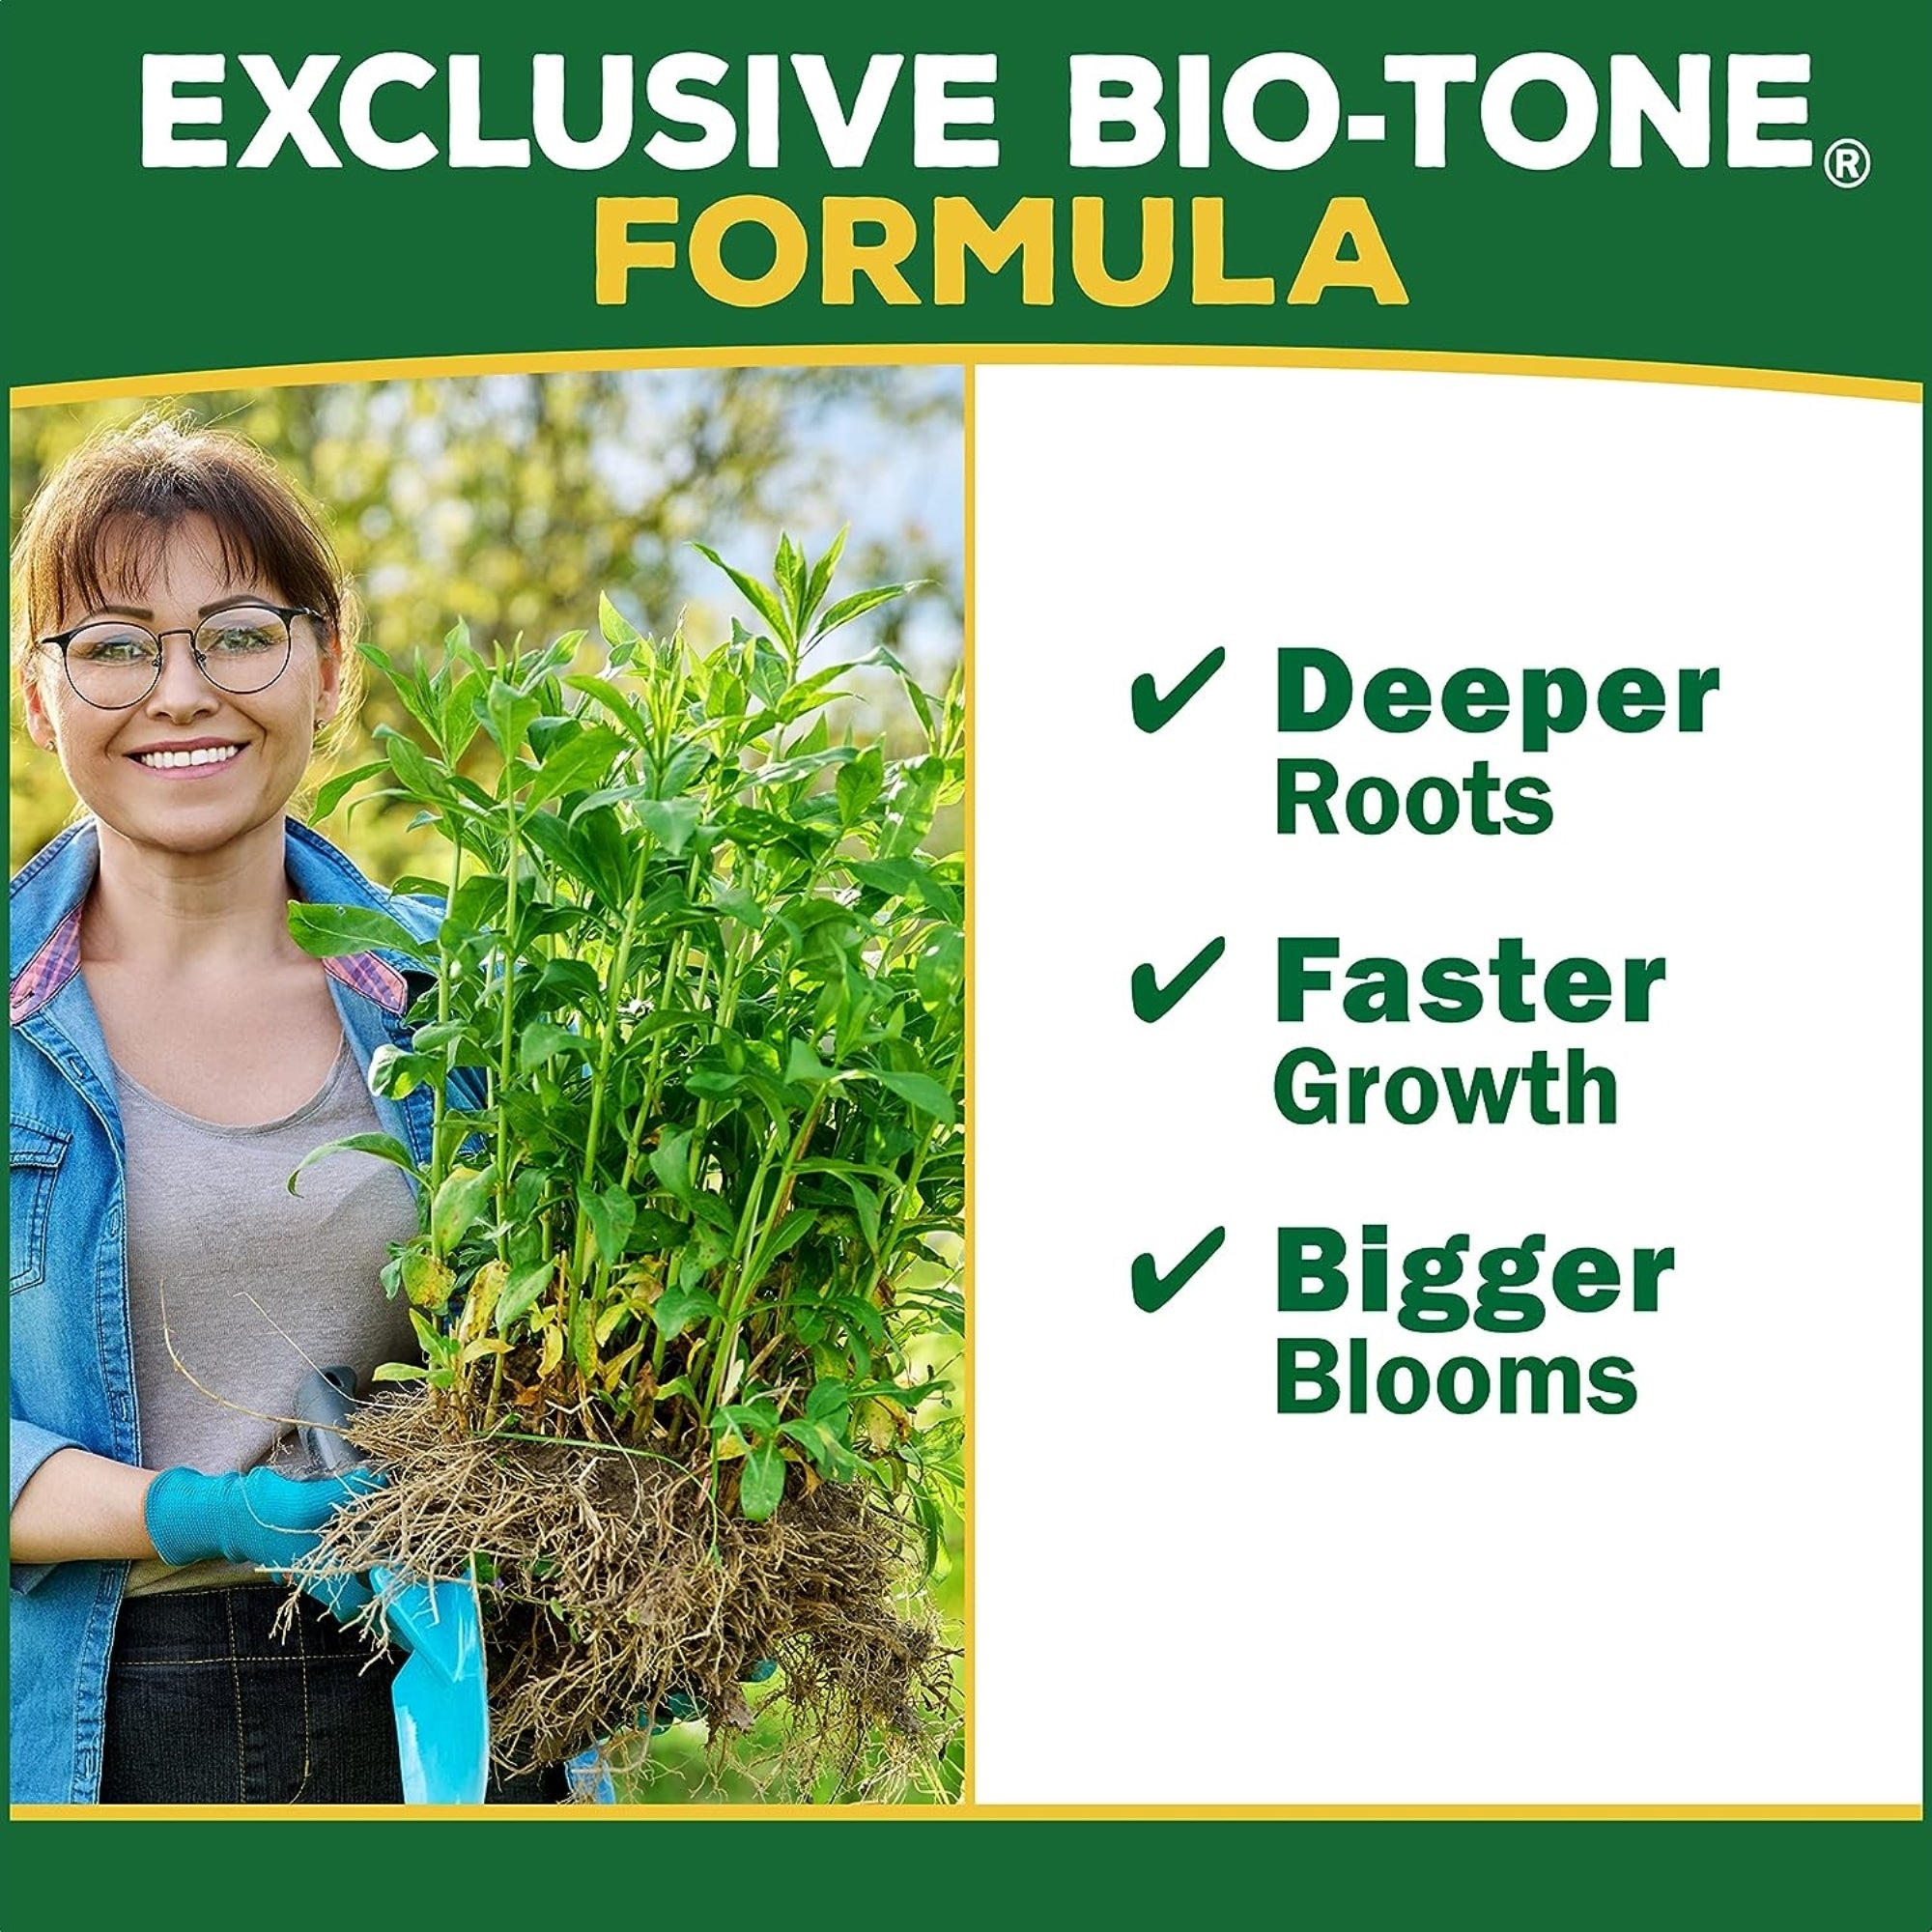 Espoma Organic Holly-tone 4-3-4 Evergreen & Azalea Plant Food for Acid Loving Plants, Better Blooms & Foliage